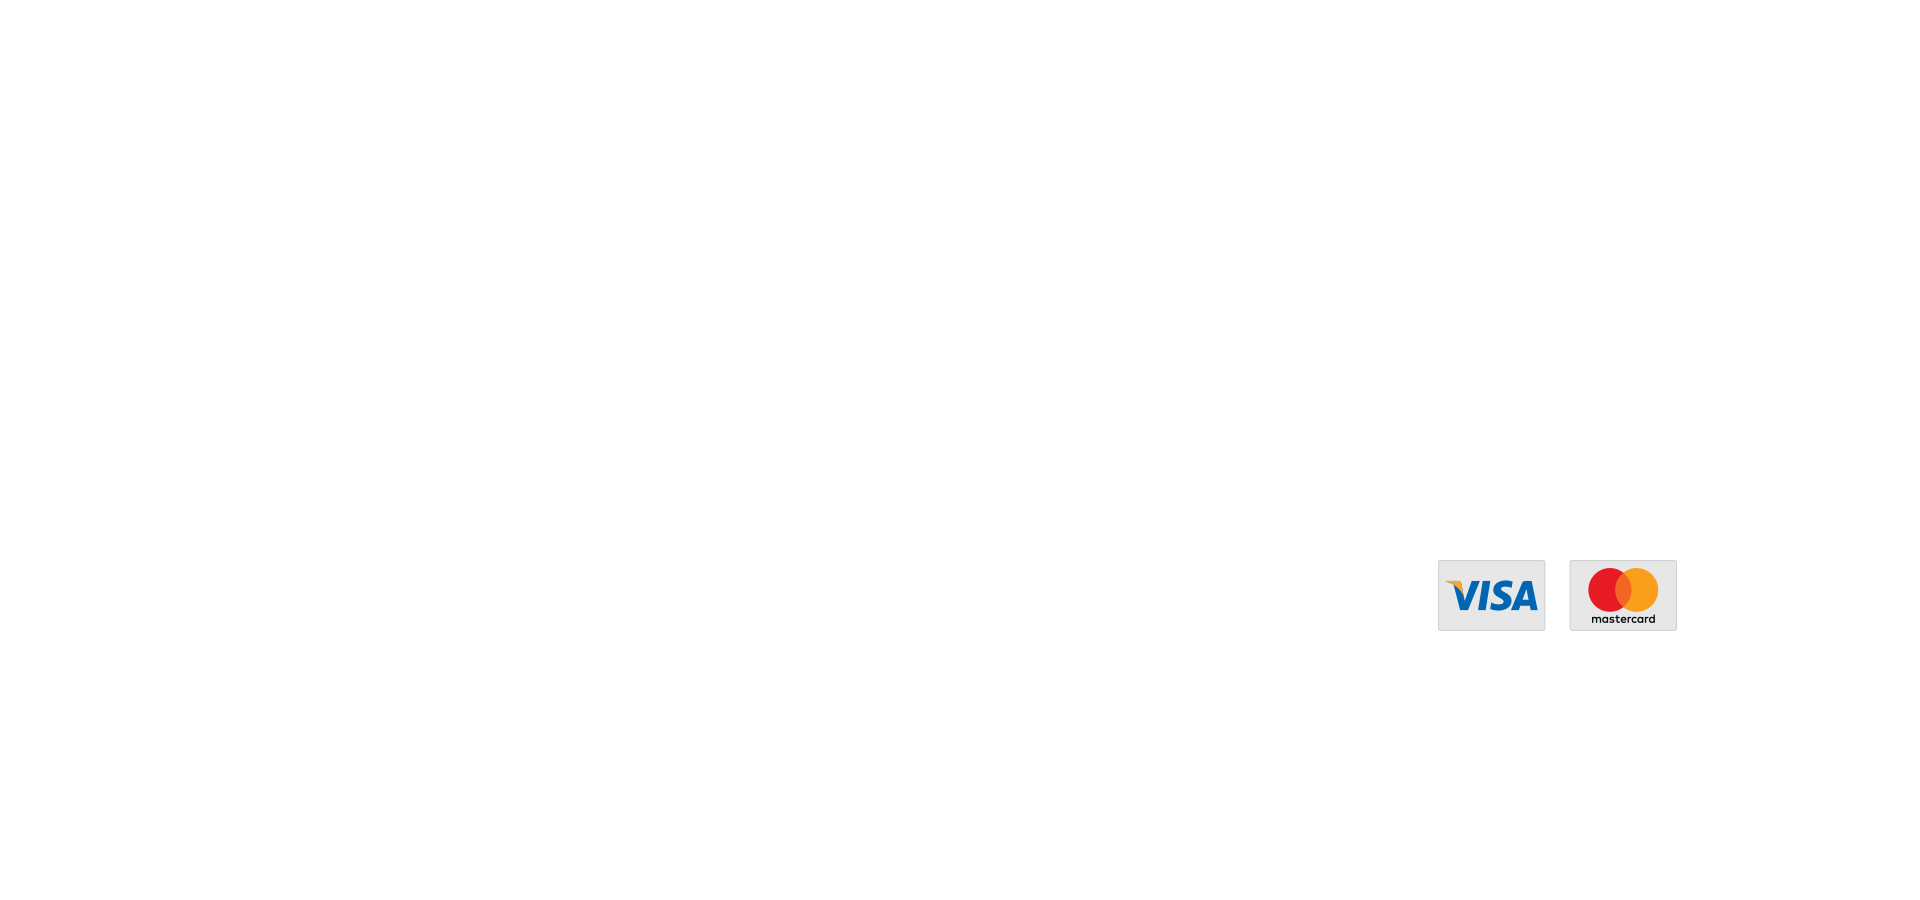 00-Slider-beneficio-icbc-txt-1.png